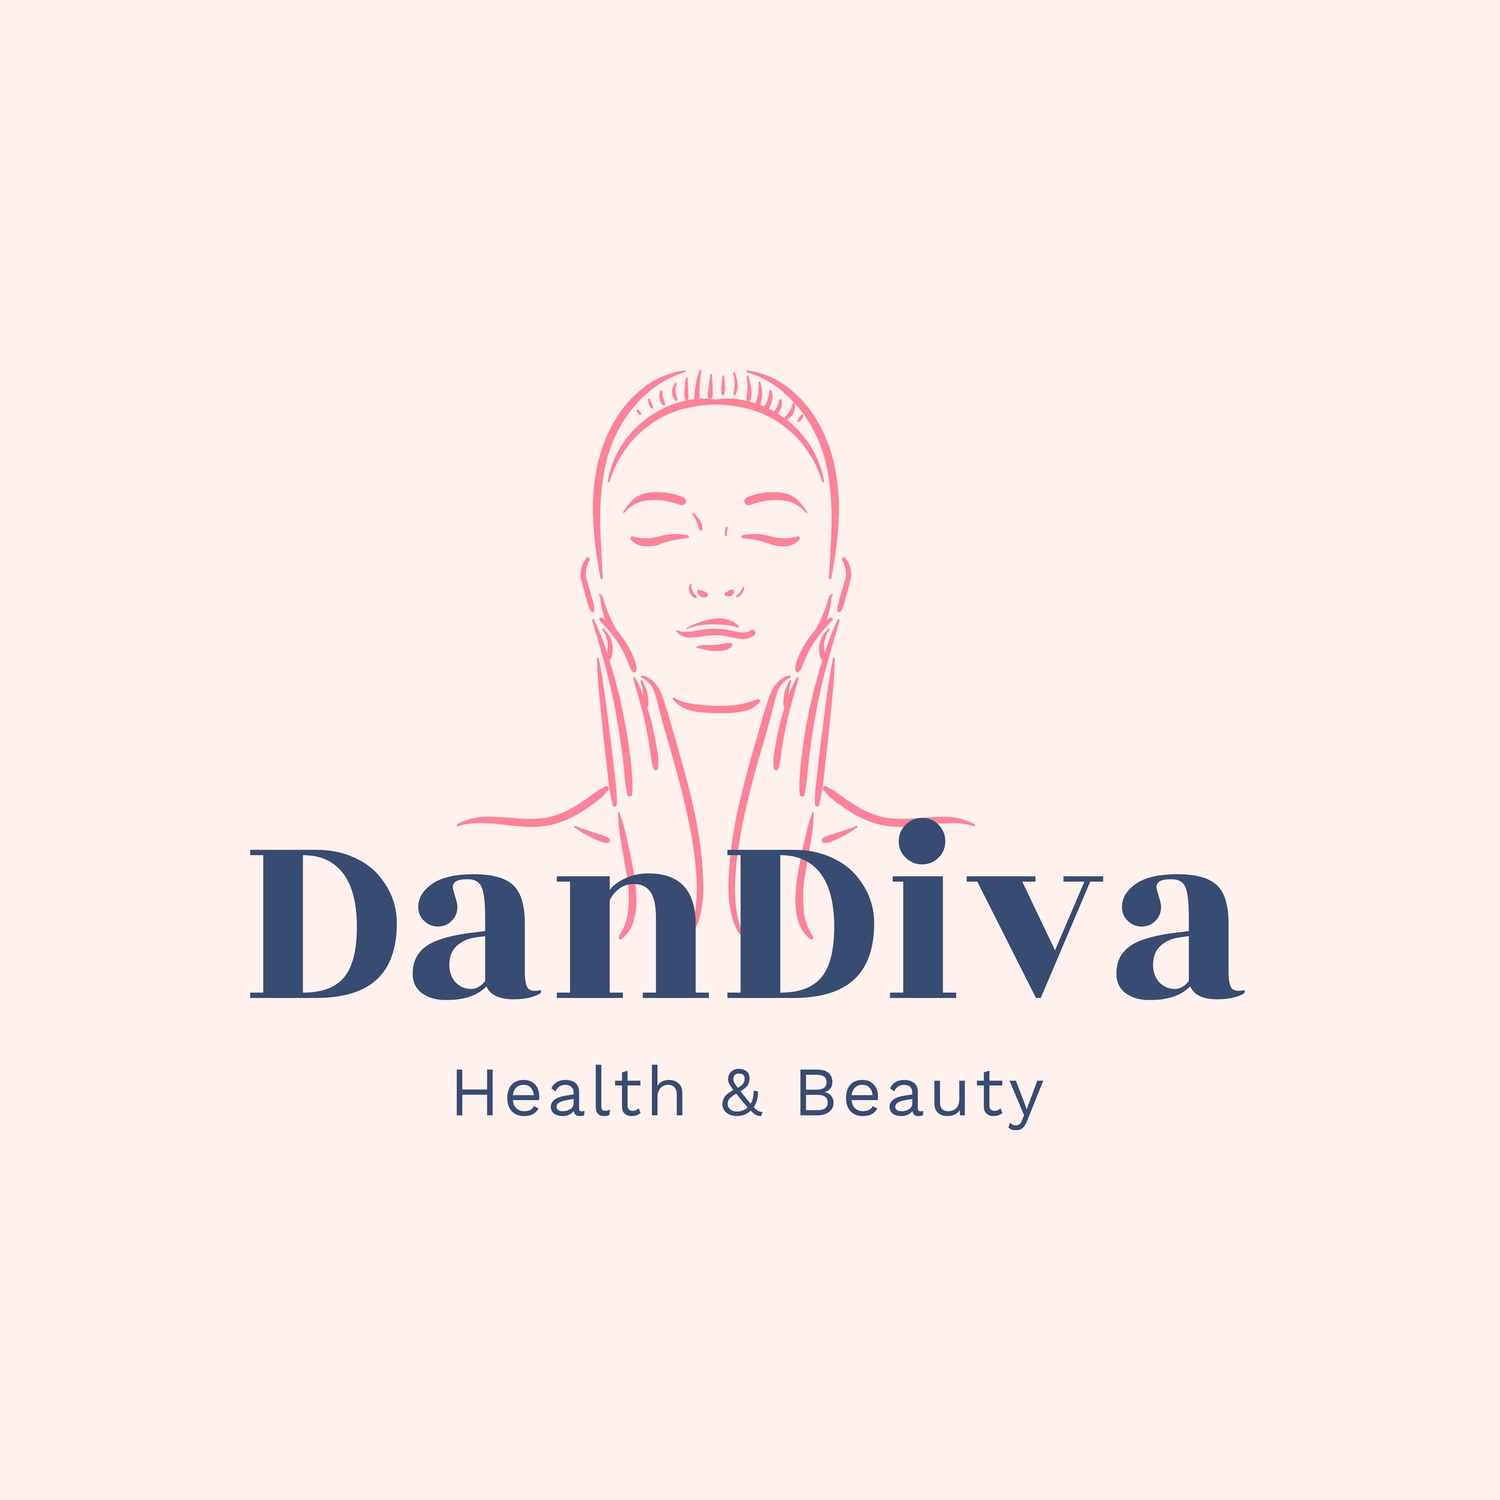 Dandiva.com